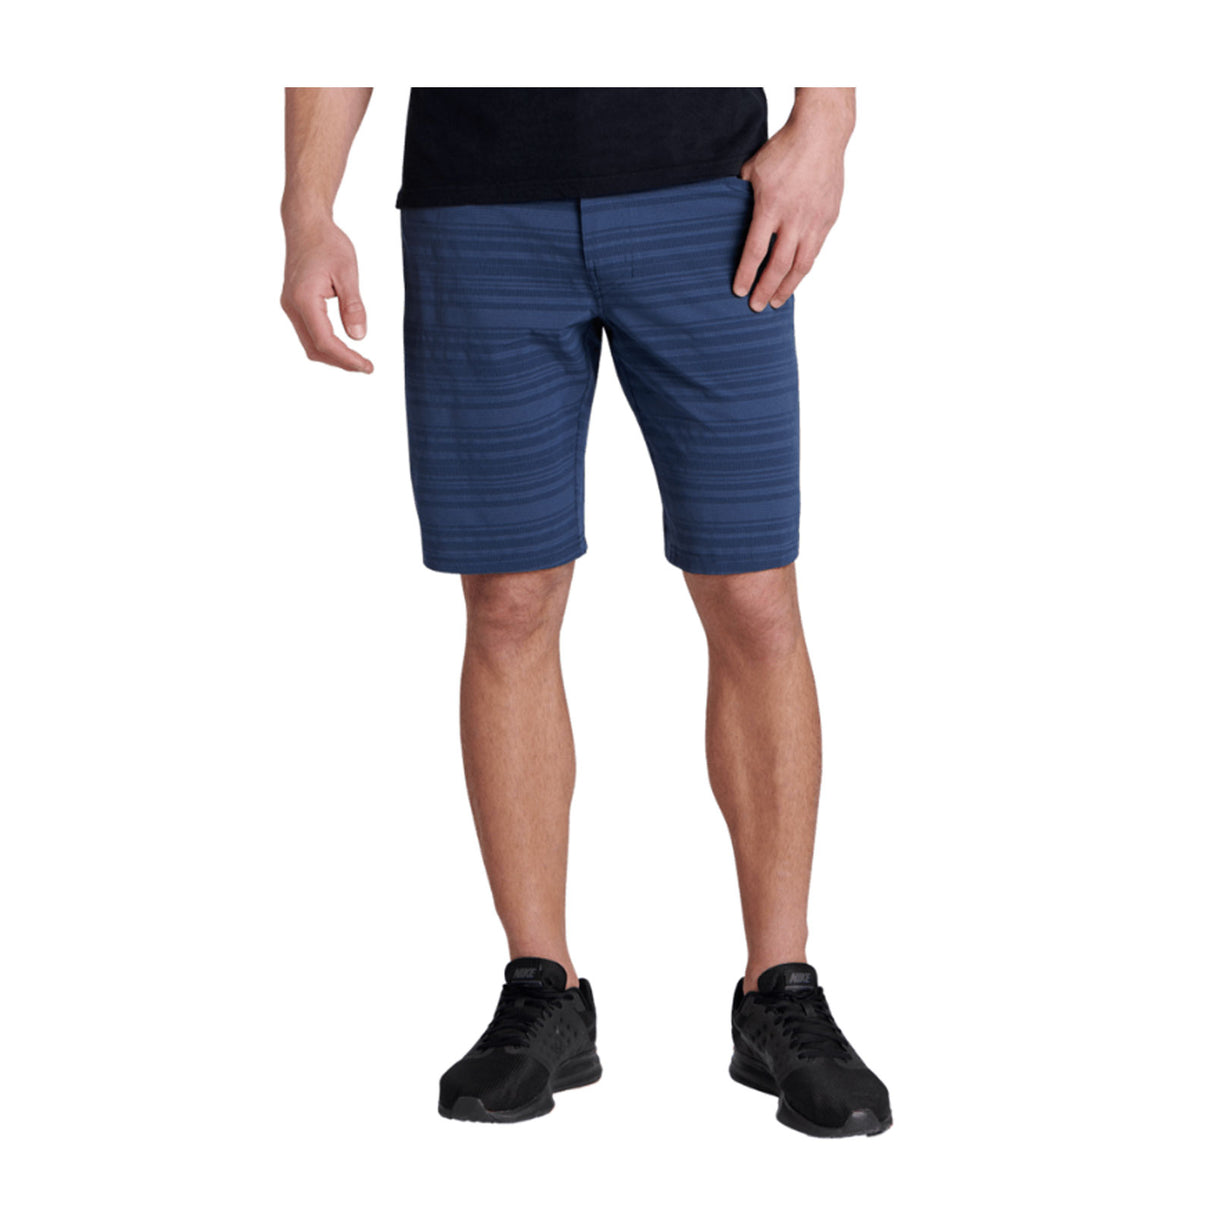 Kuhl Upriser Short (Men) - Stripe Pirate Blue Apparel - Bottom - Short - The Heel Shoe Fitters